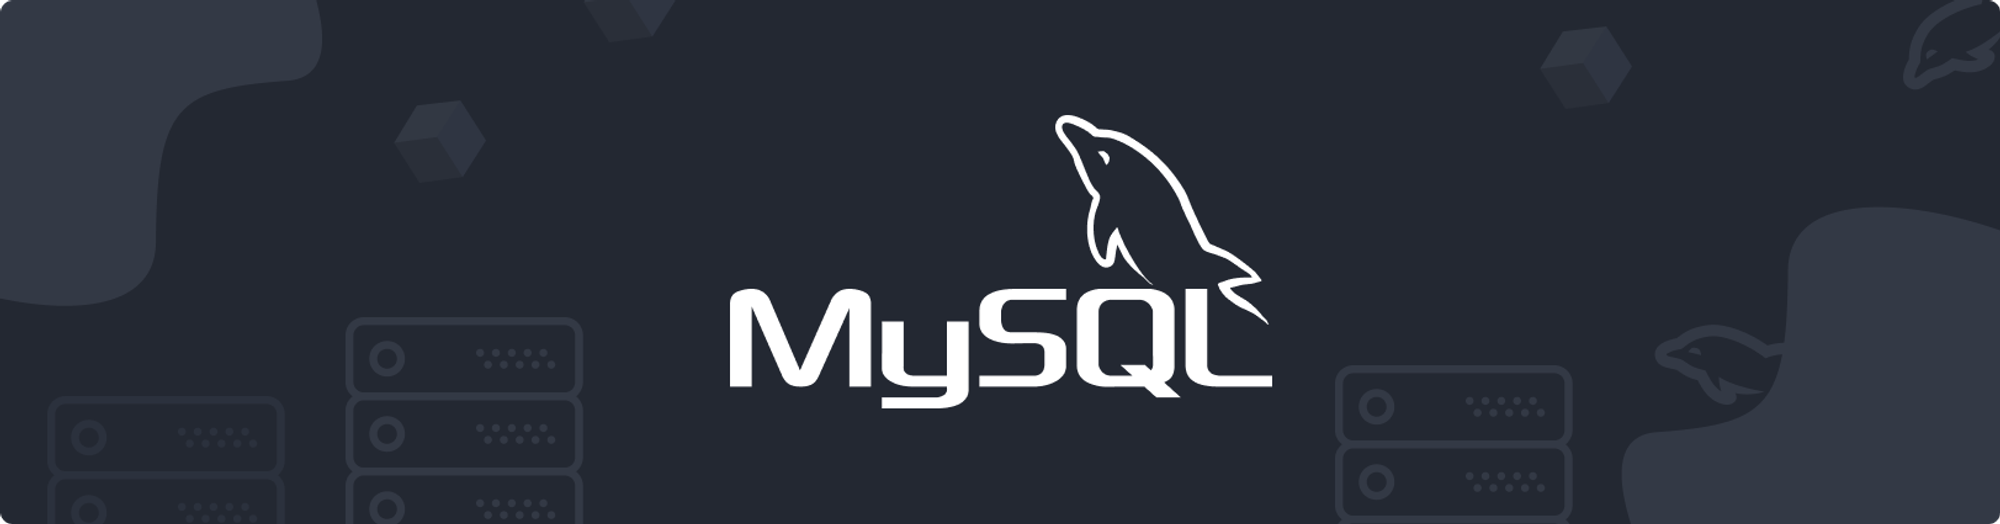 Belajar-MySQL: Panduan Lengkap untuk Menguasai Perintah-Perintah SQL